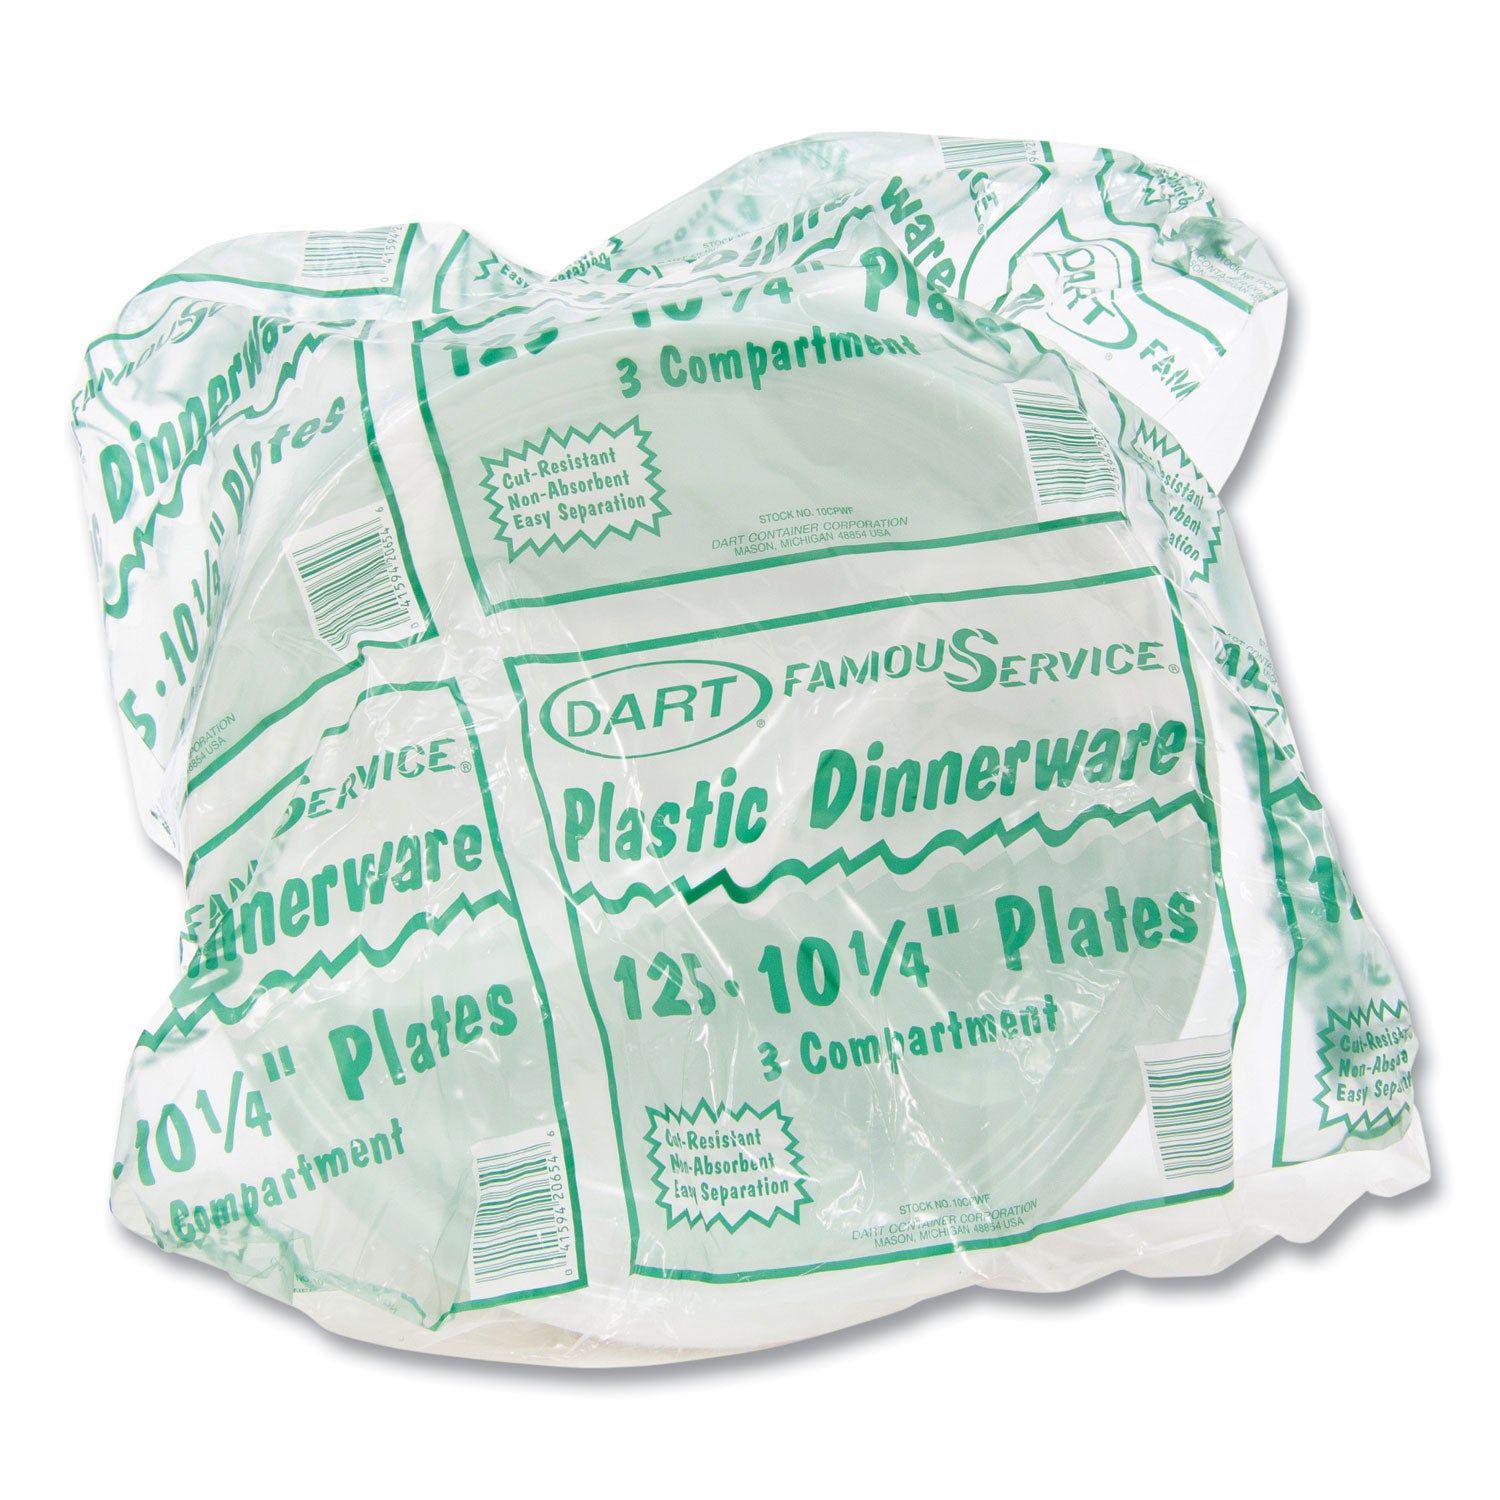 Famous Service Plastic Dinnerware, Plate, 3-Compartment, 10.25" dia, White, 125/Pack, 4 Packs/Carton - 